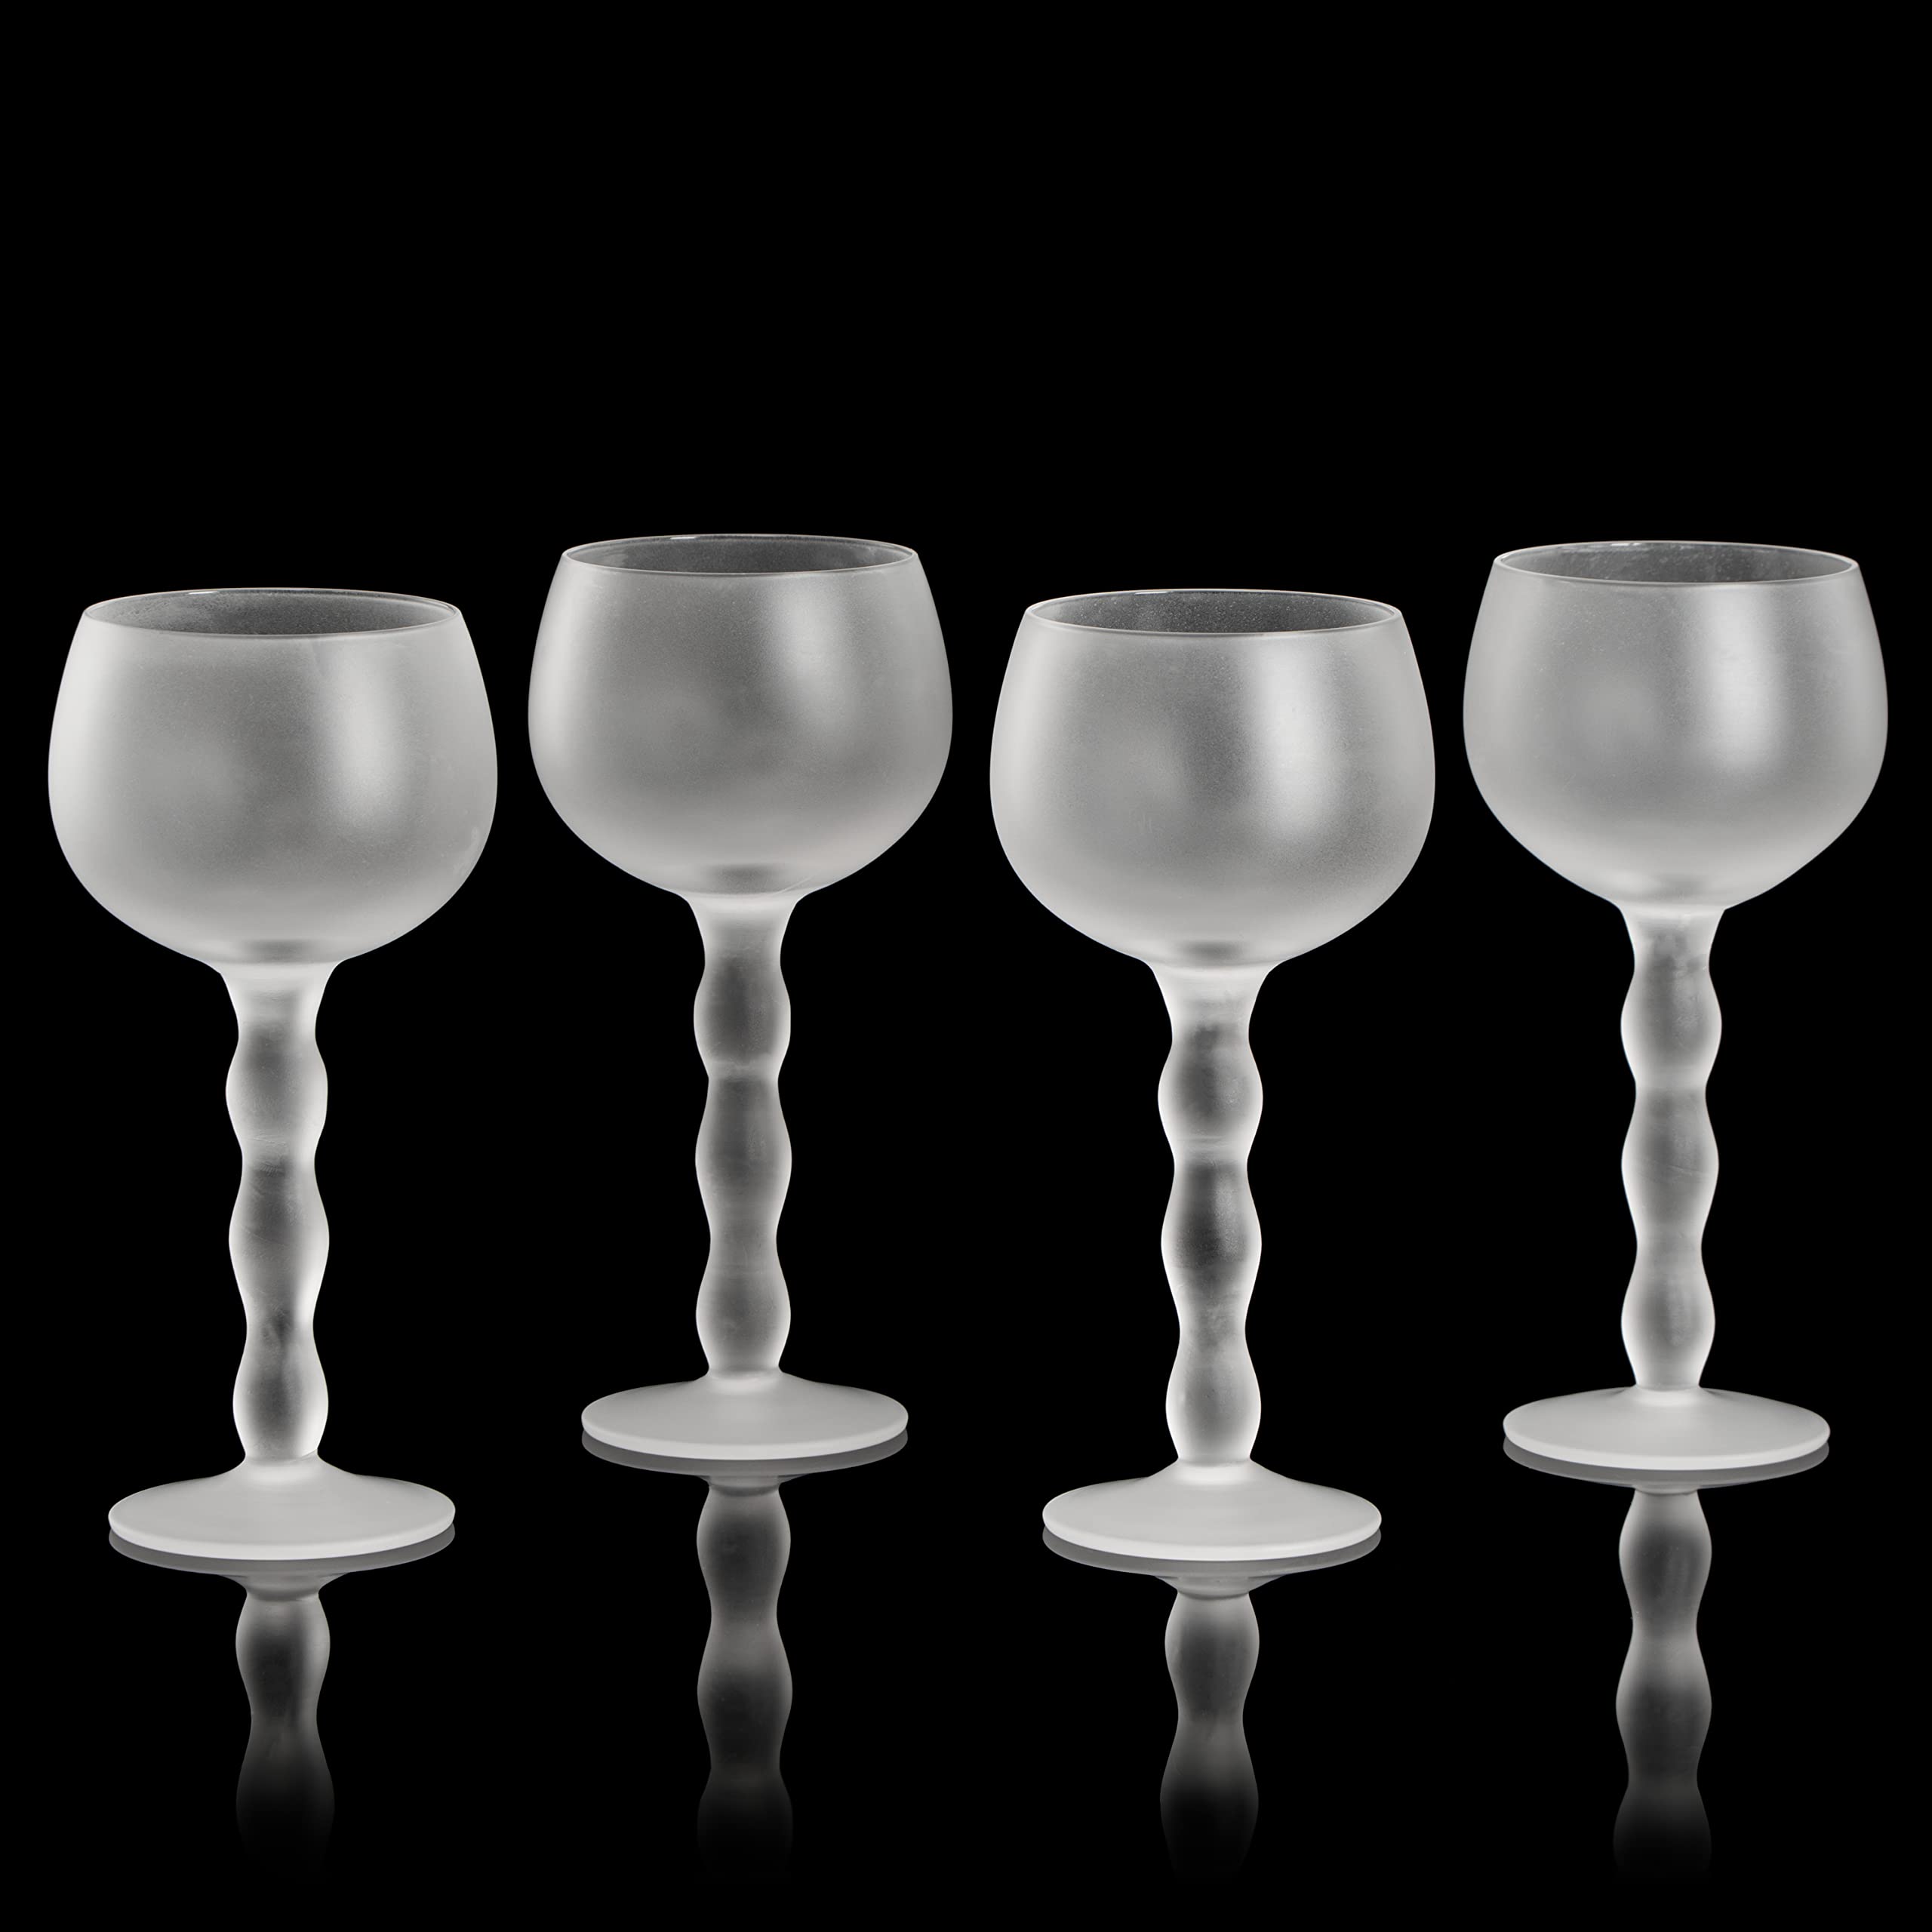 SKY white wine glasses in lead-free crystal